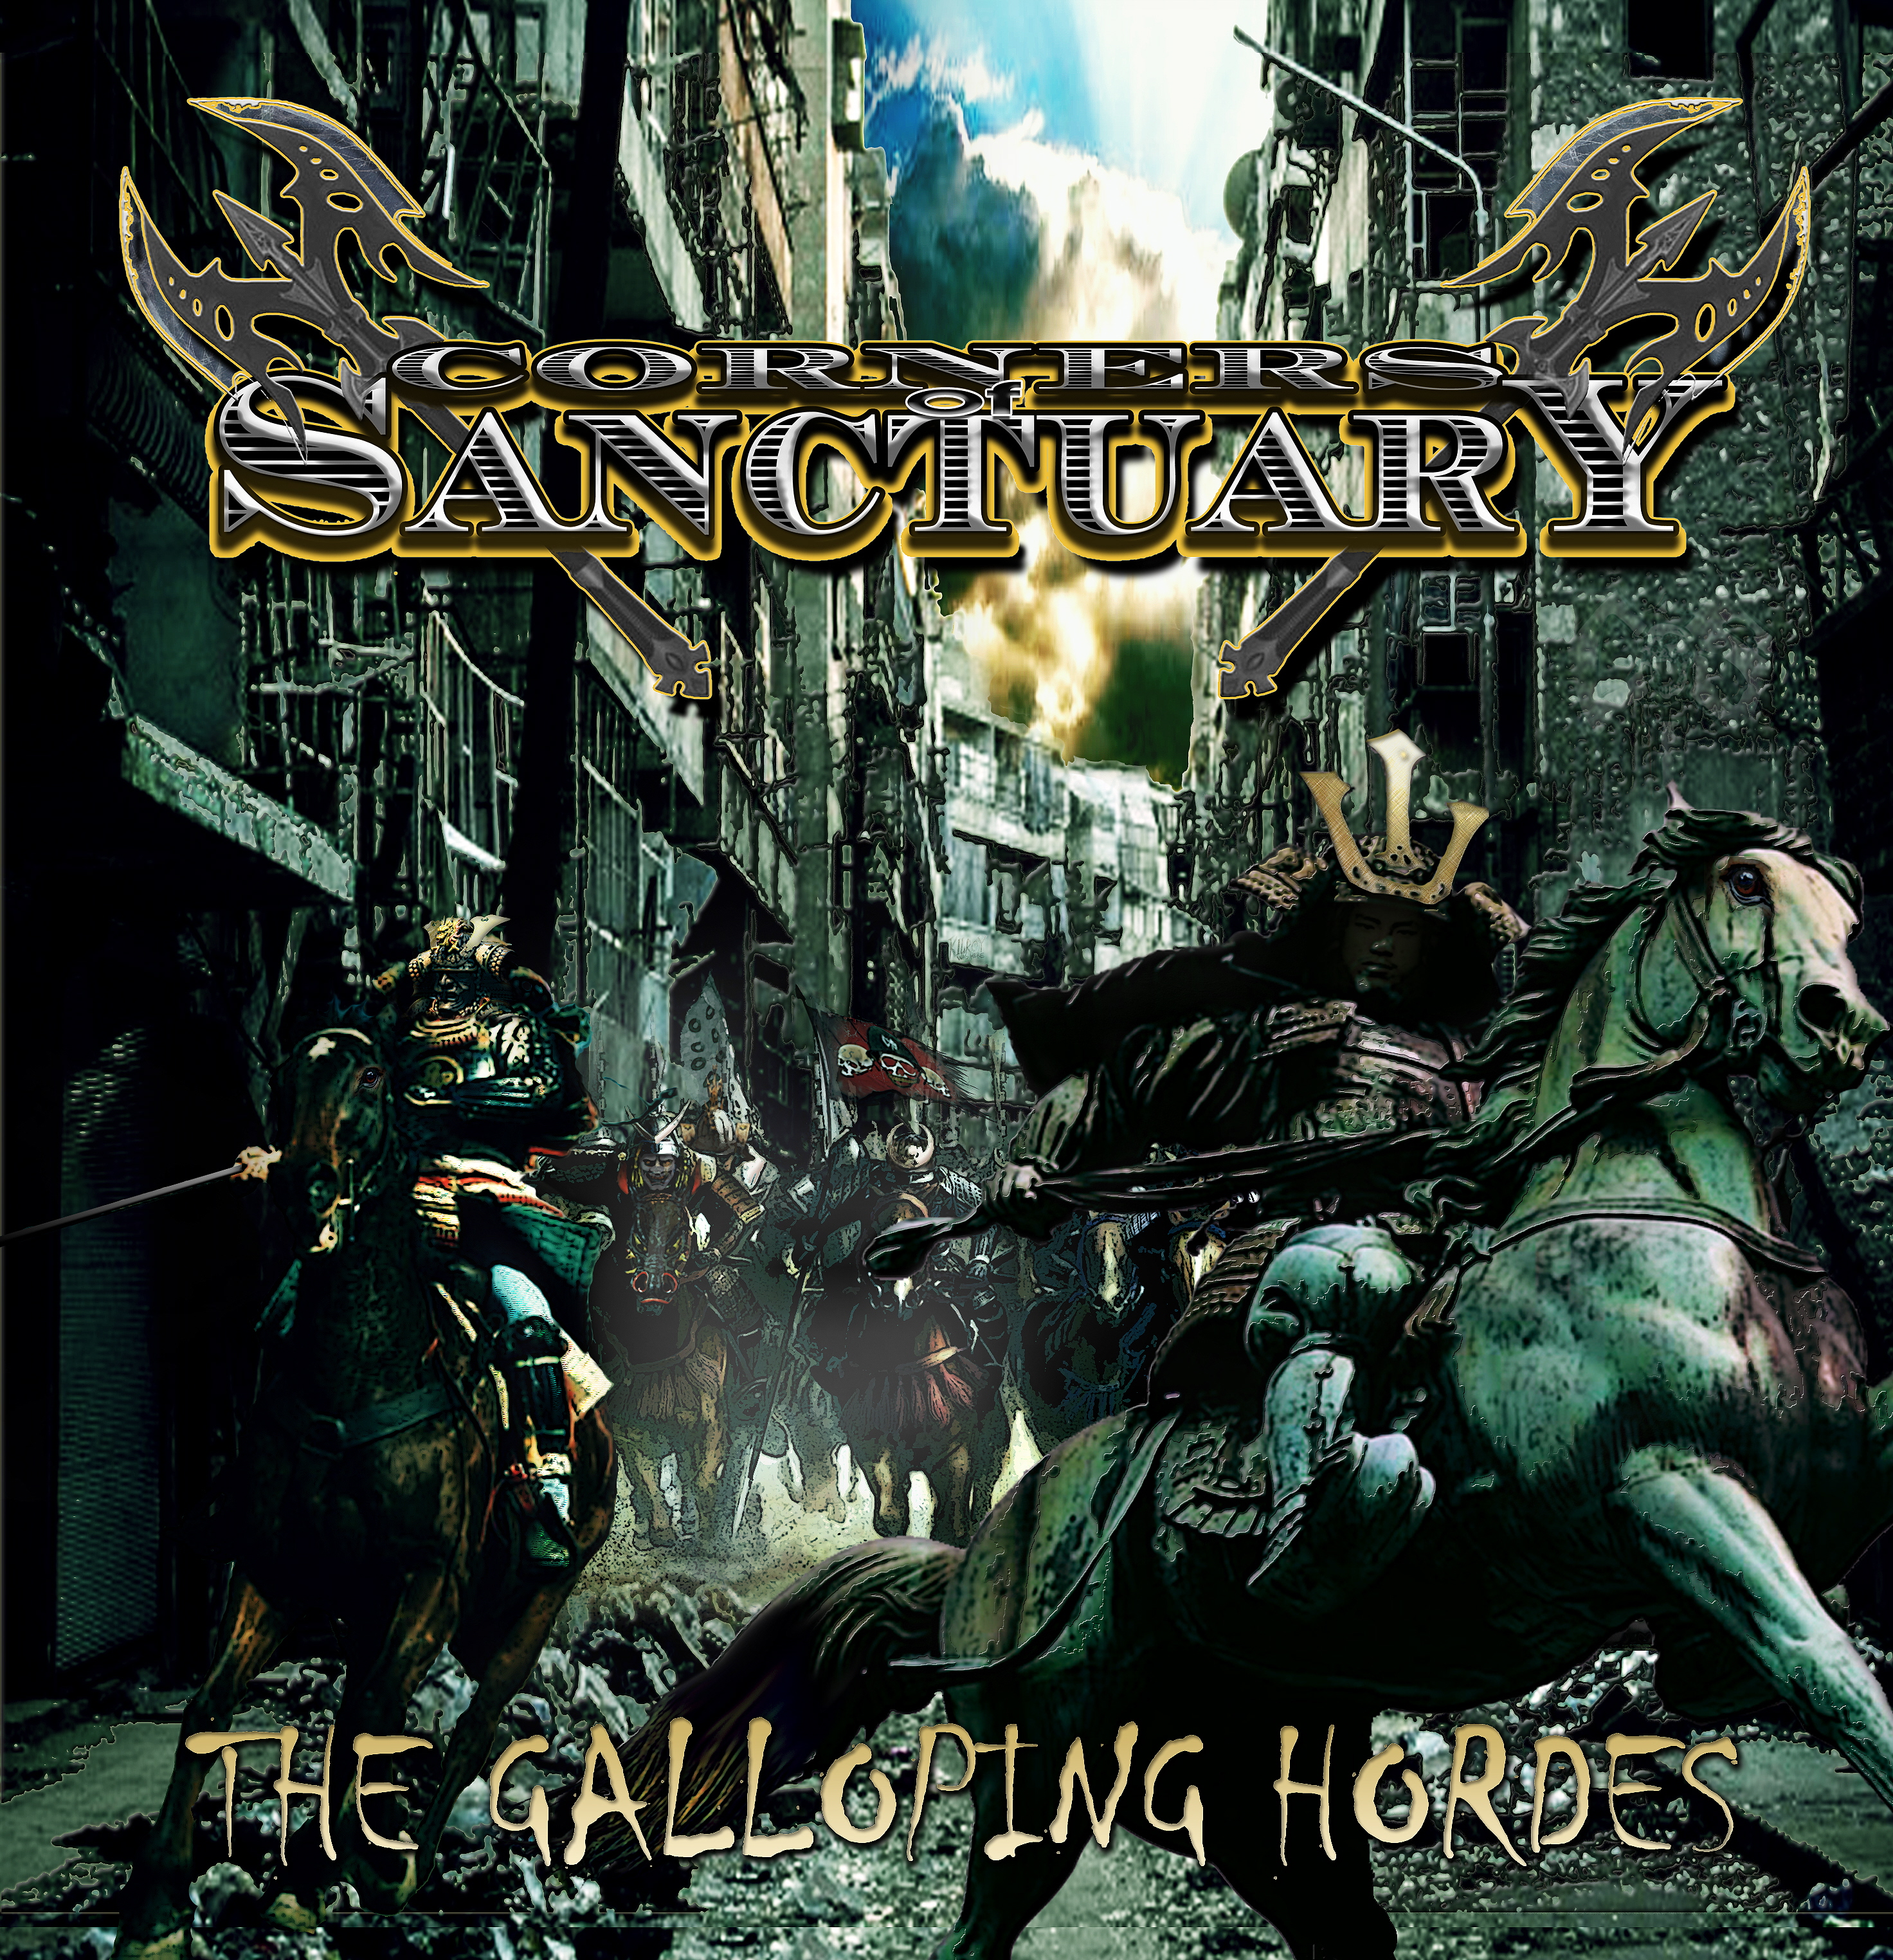 Corners of Sanctuary The Galloping Hordes Album Cover Revised April 2018 Artwork Full Rendering b02